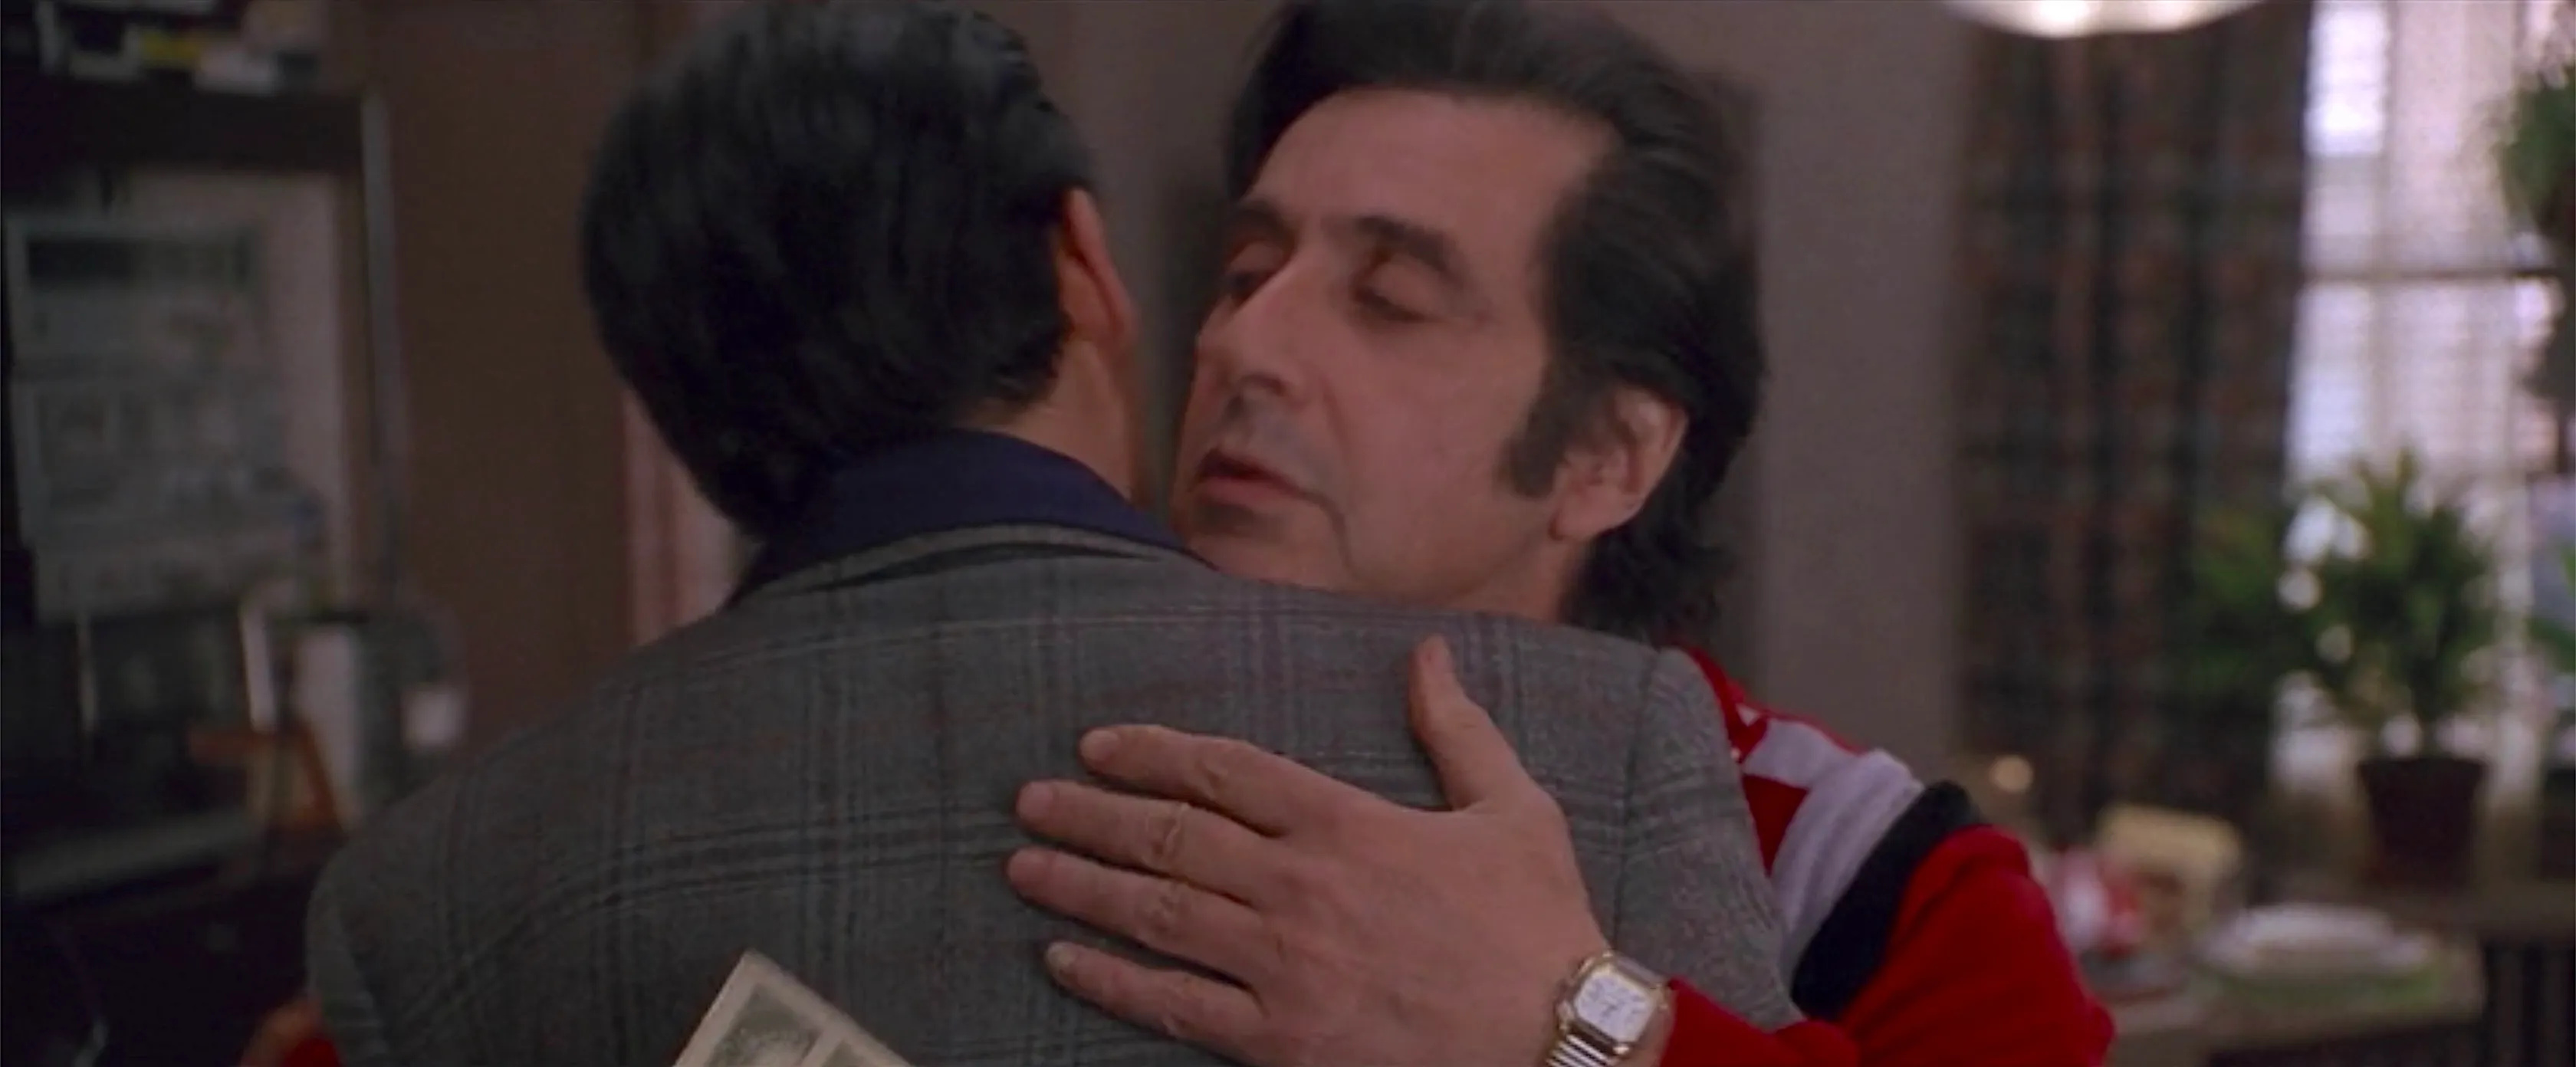 Donnie Brasco (Movies), Pacino's Red Christmas Tracksuit, BAMF Style, 3360x1400 Dual Screen Desktop